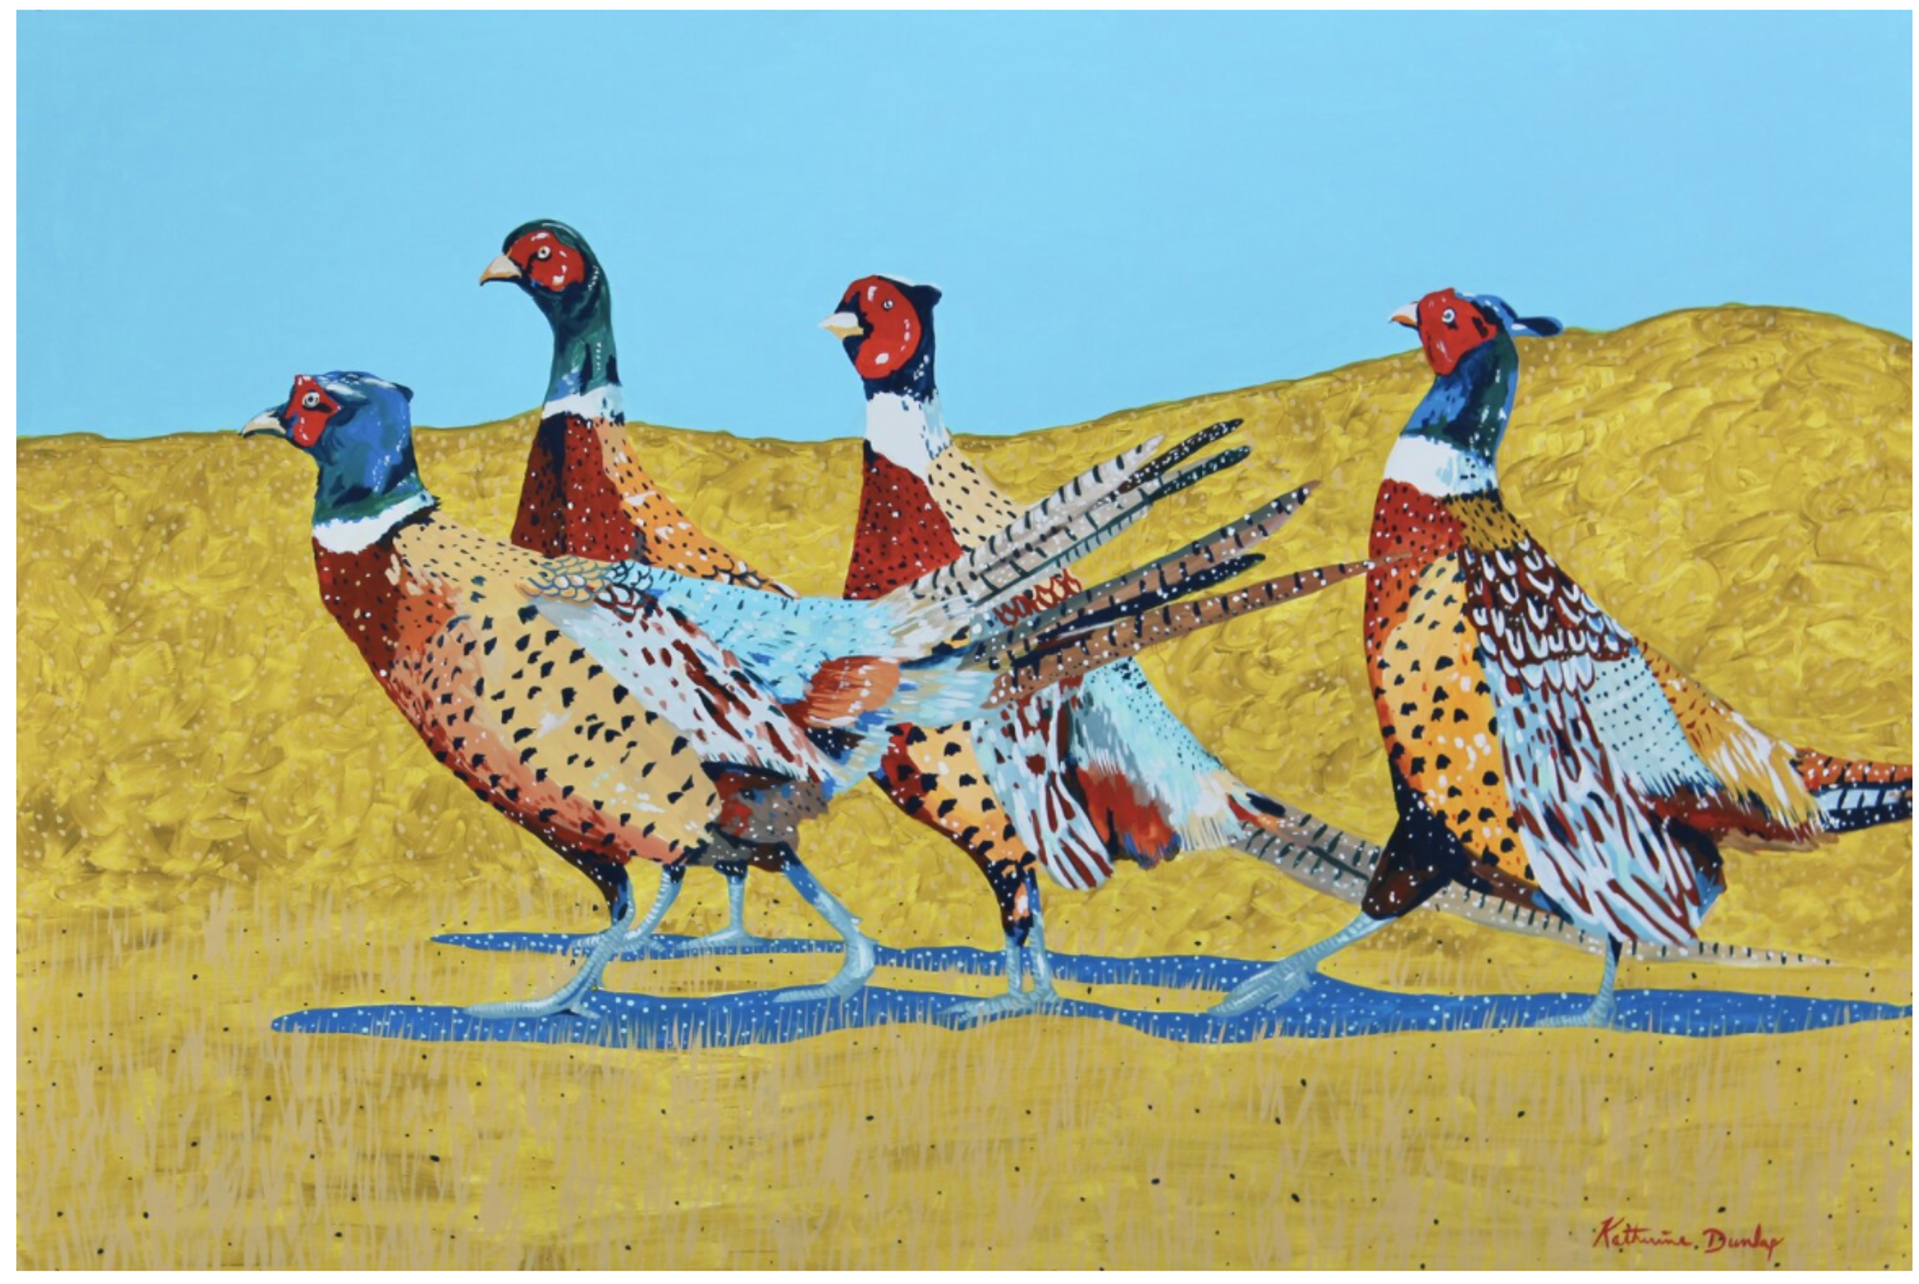 The Pheasants by Katherine Dunlap